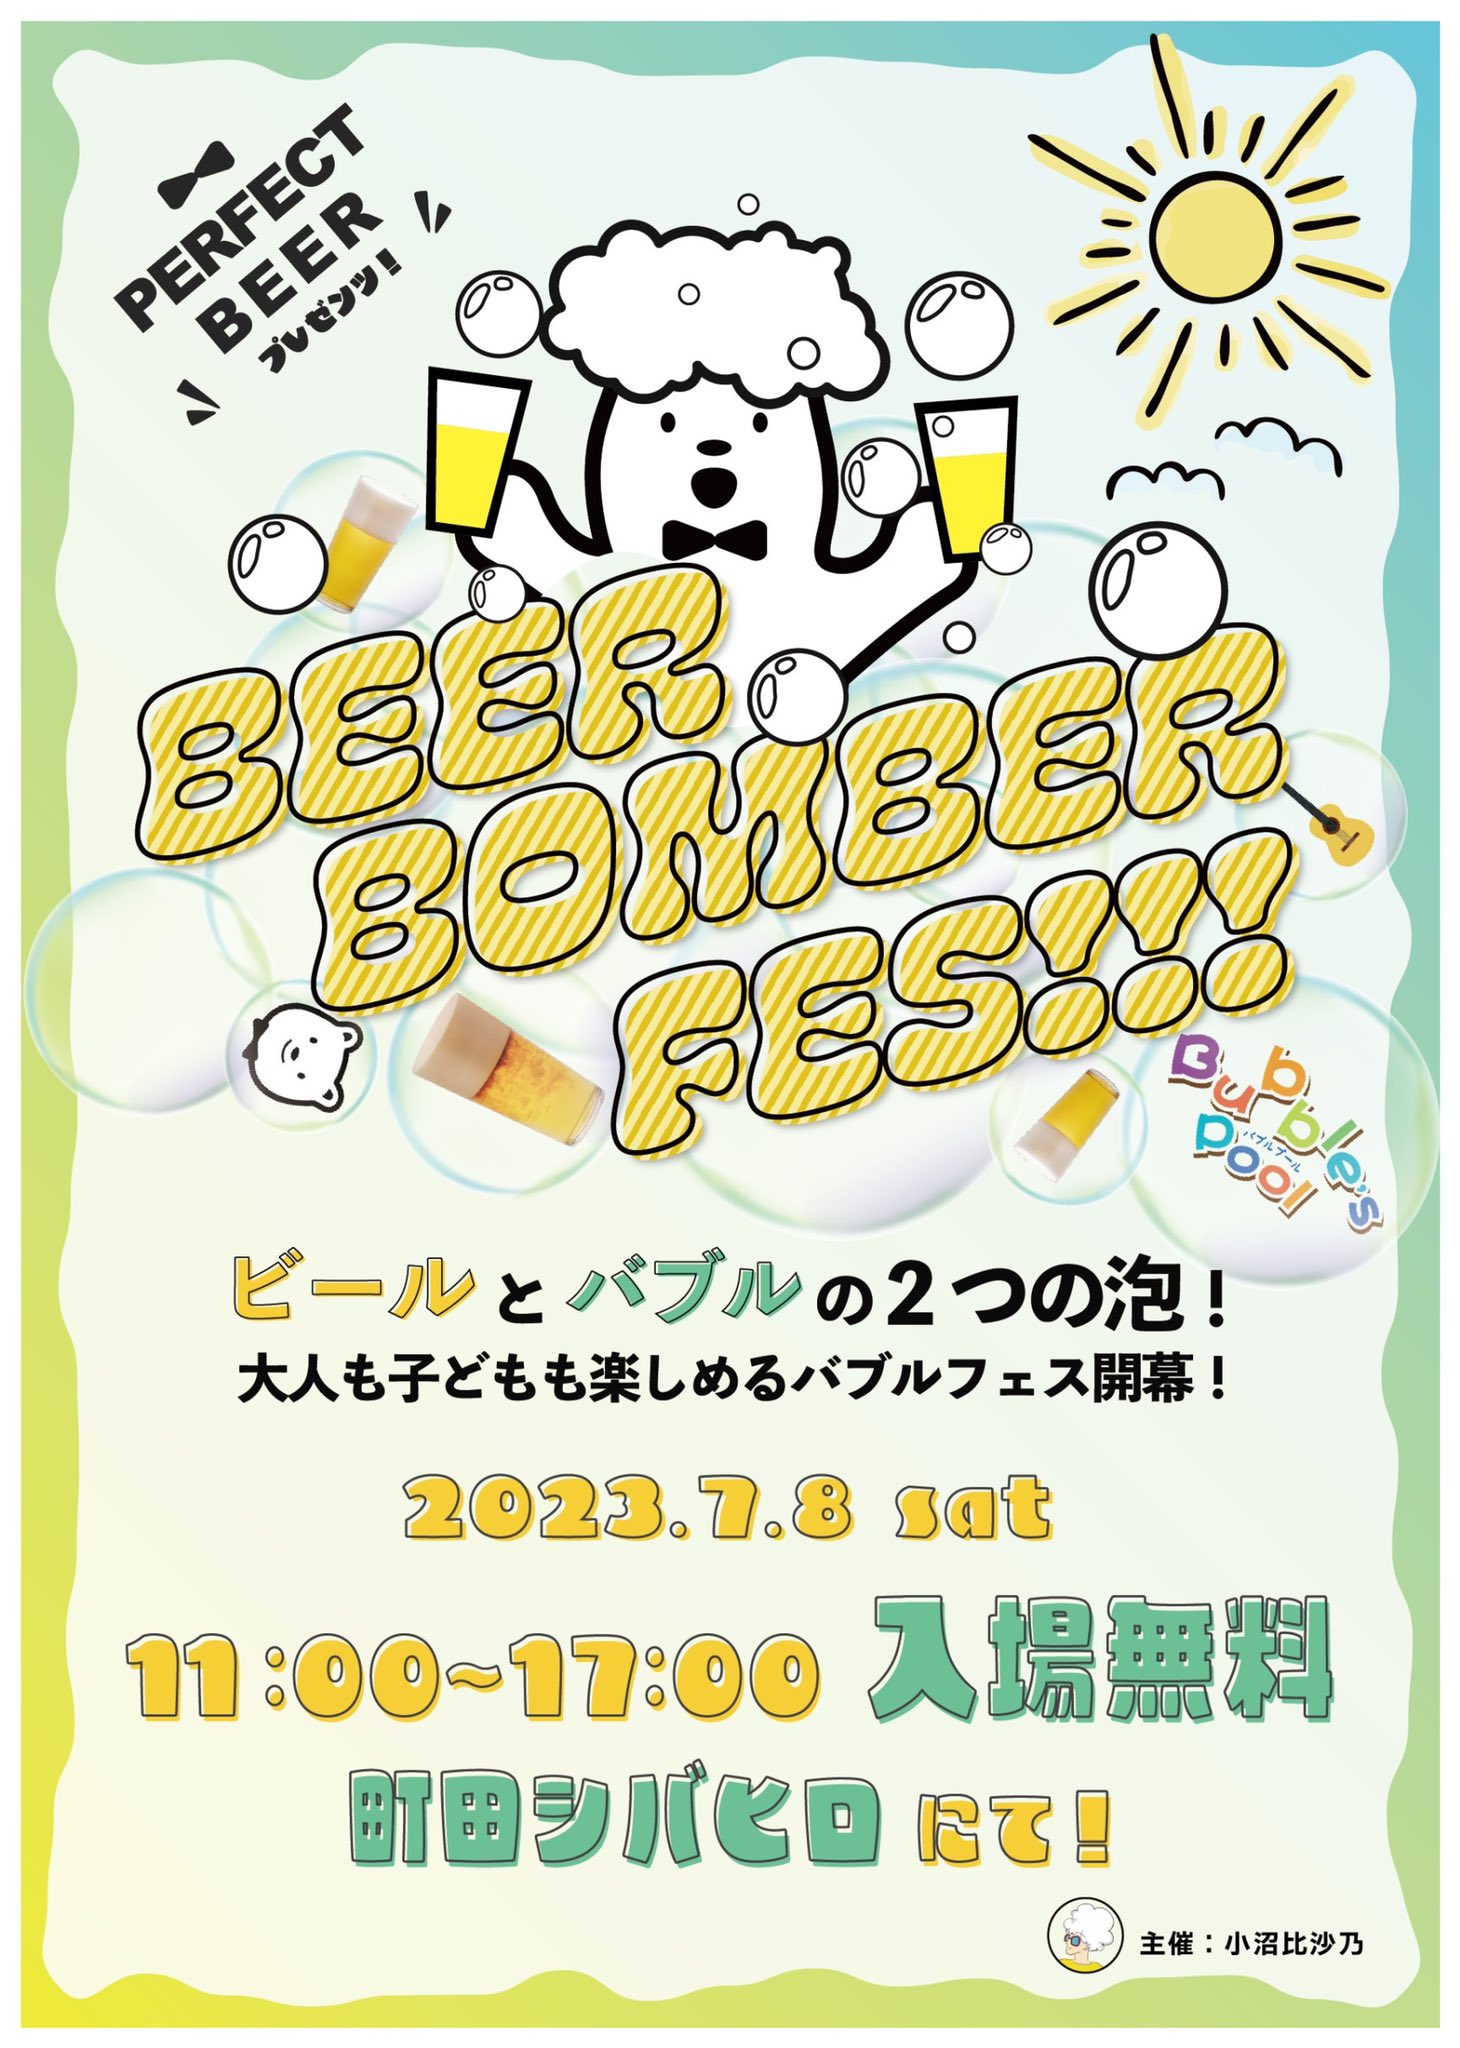 BEER BOMBER FES!!!